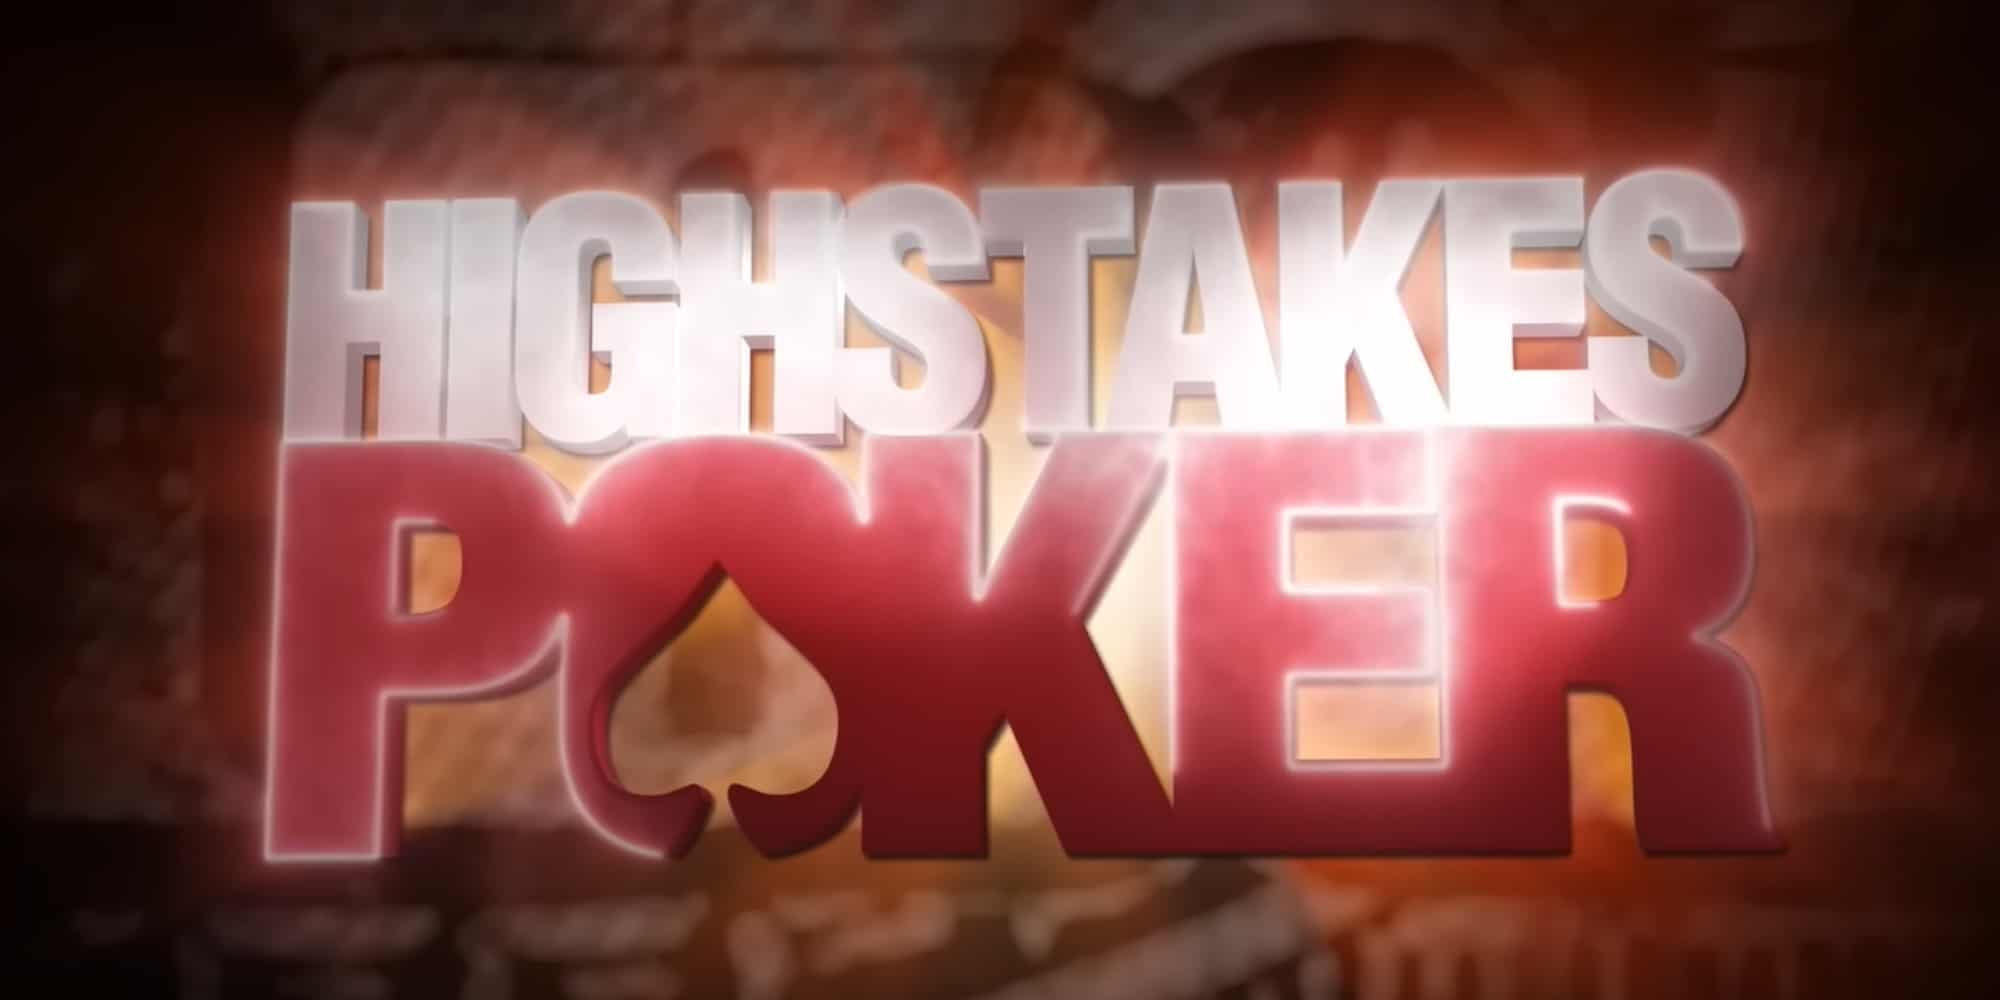 High Stakes Poker Season 10 Episode 3 Release Date